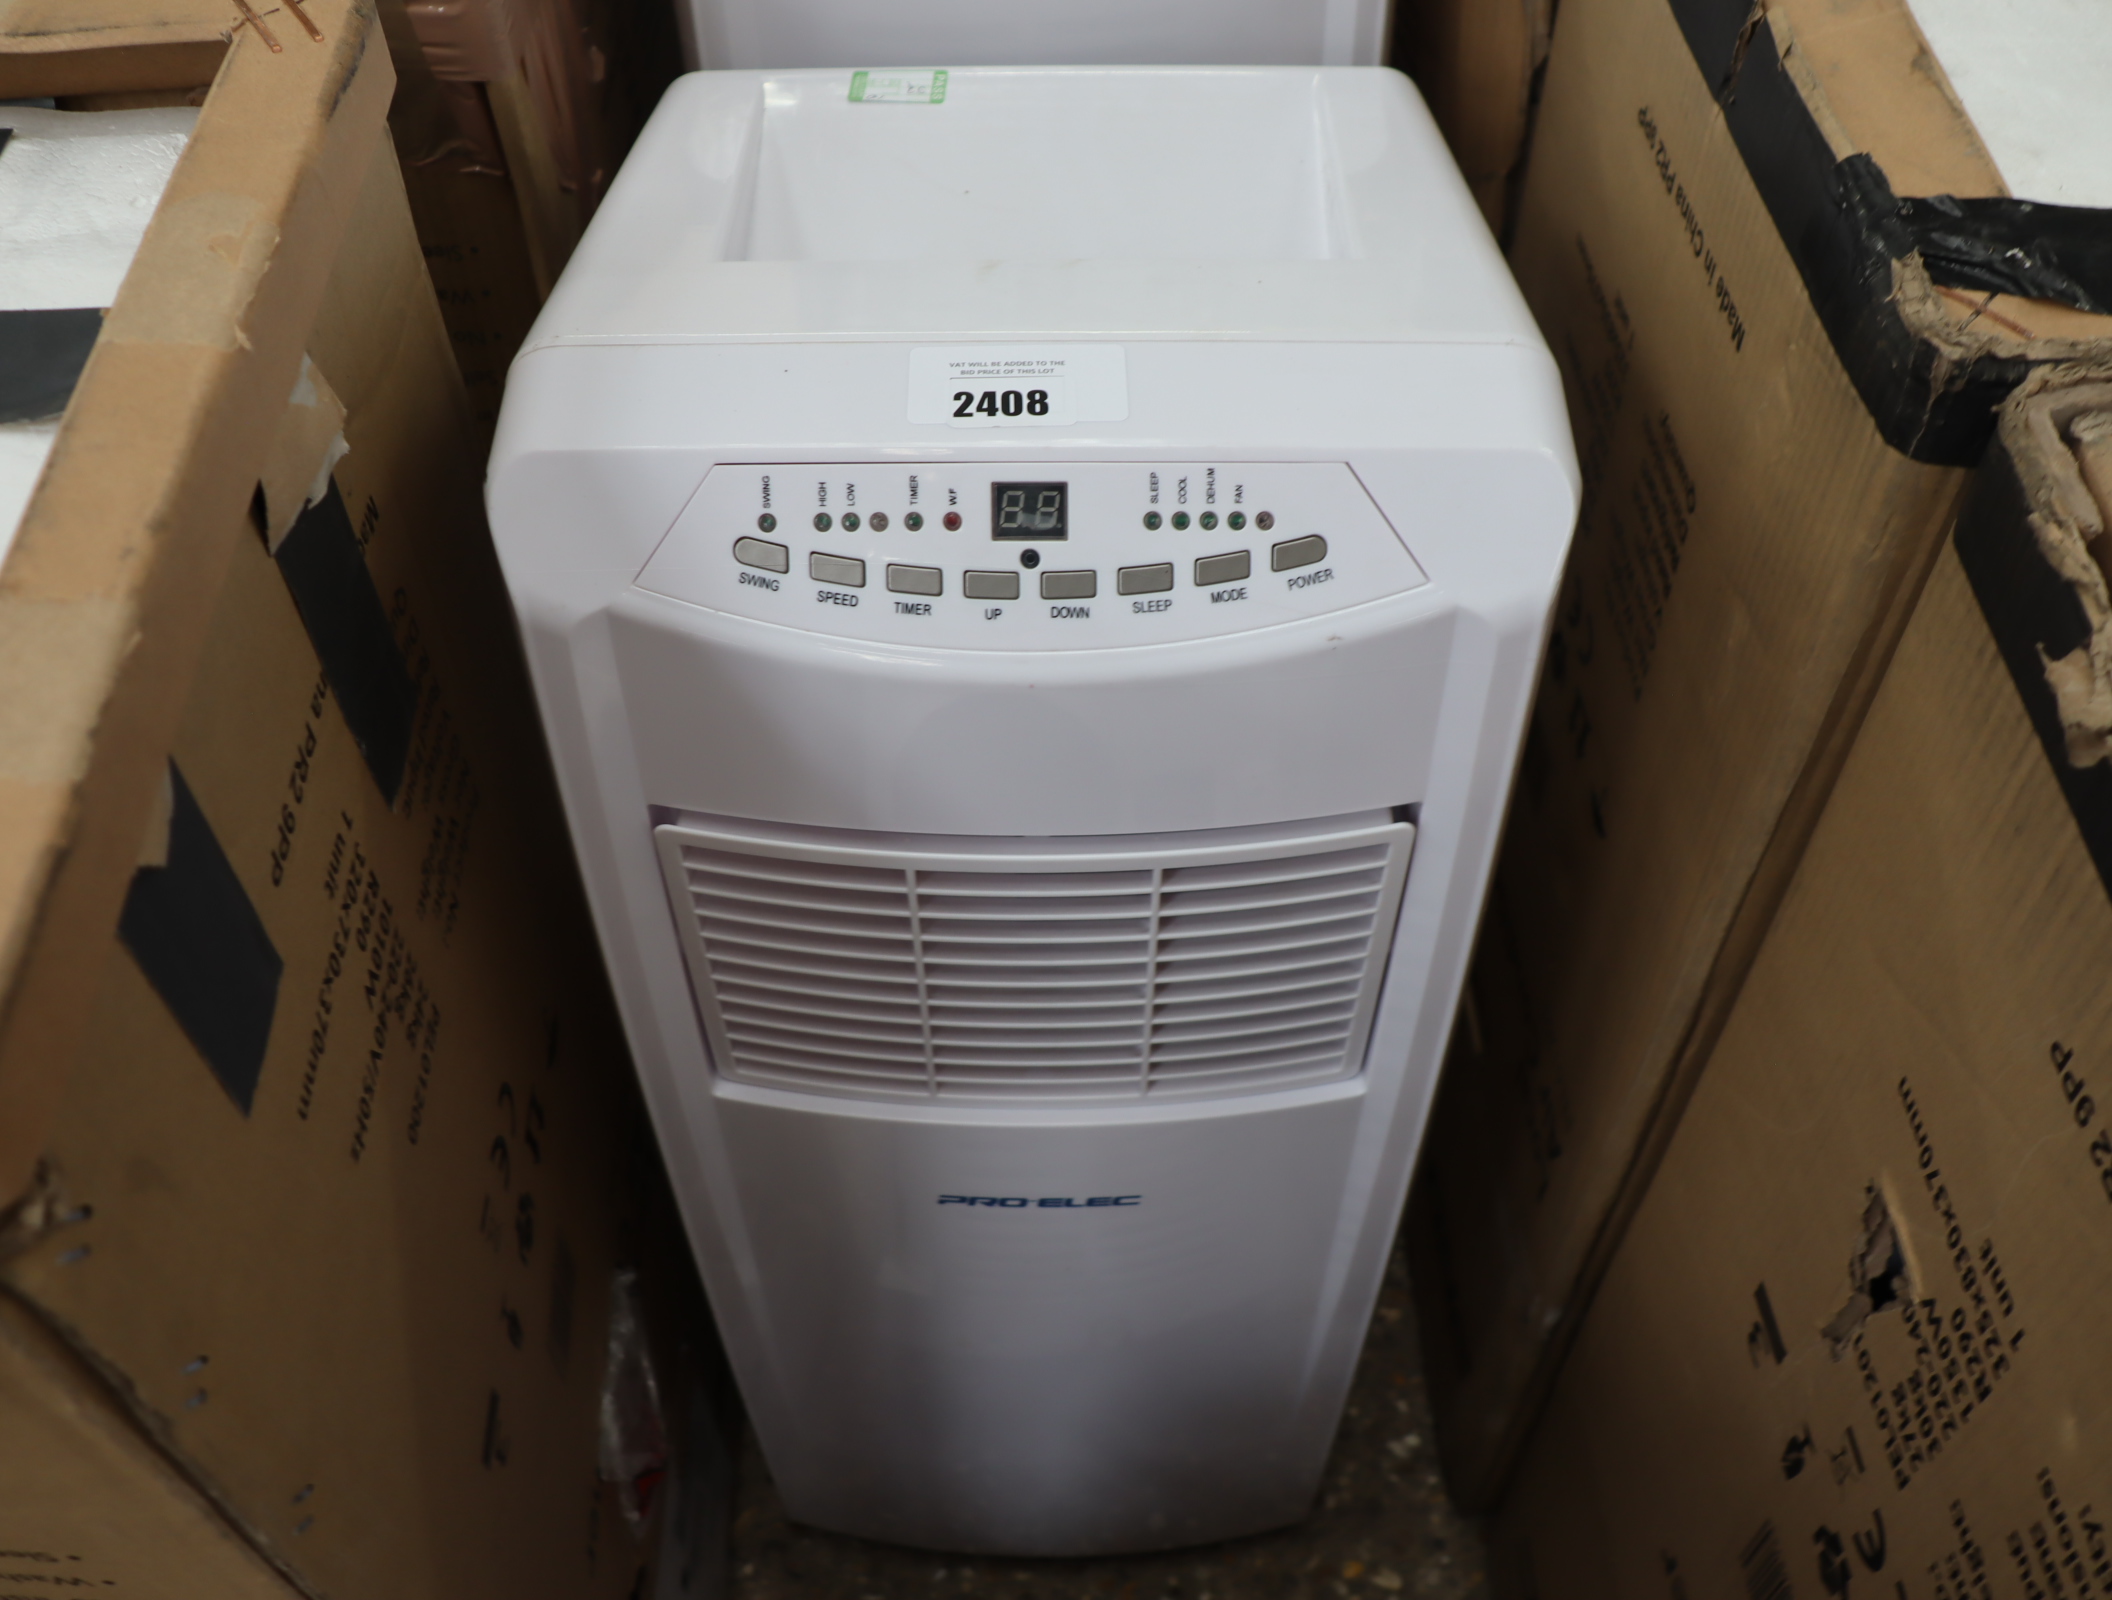 Pro Elec PEL01201 mobile air conditioning unit